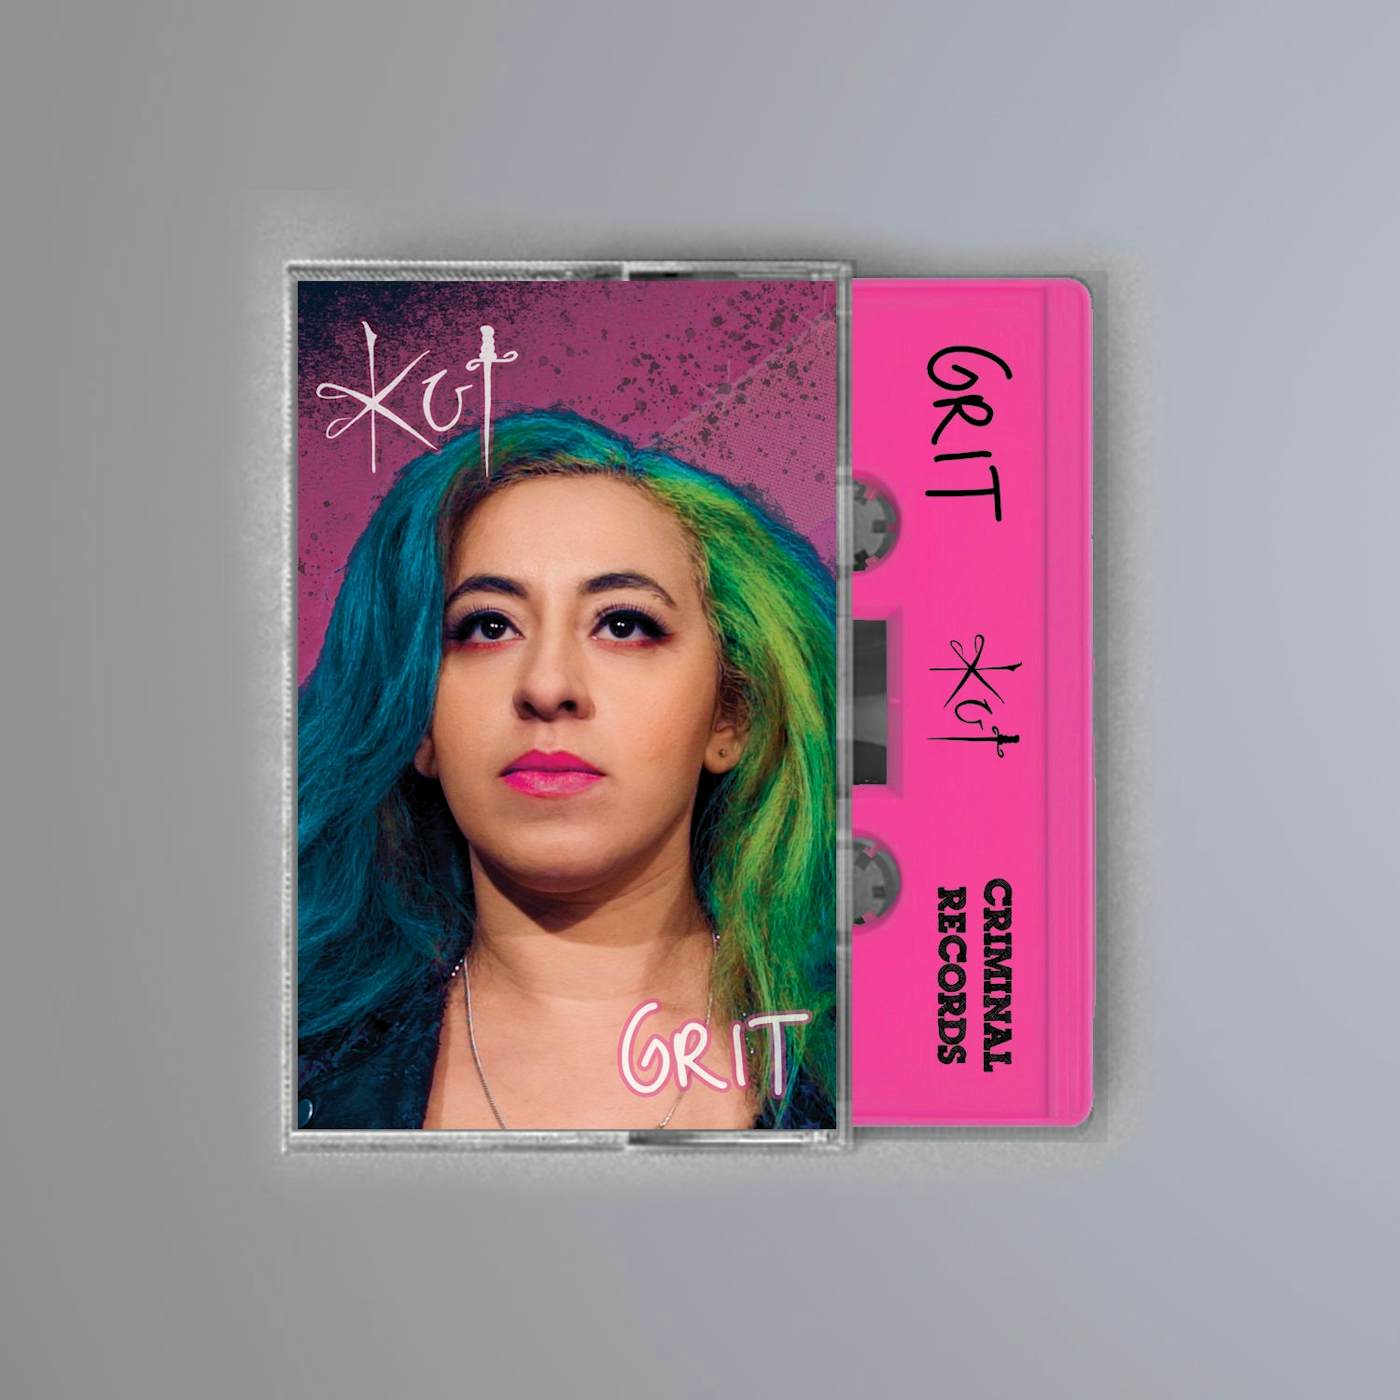 The Kut 'GRIT' Album Signed Cassette Tape - Pink